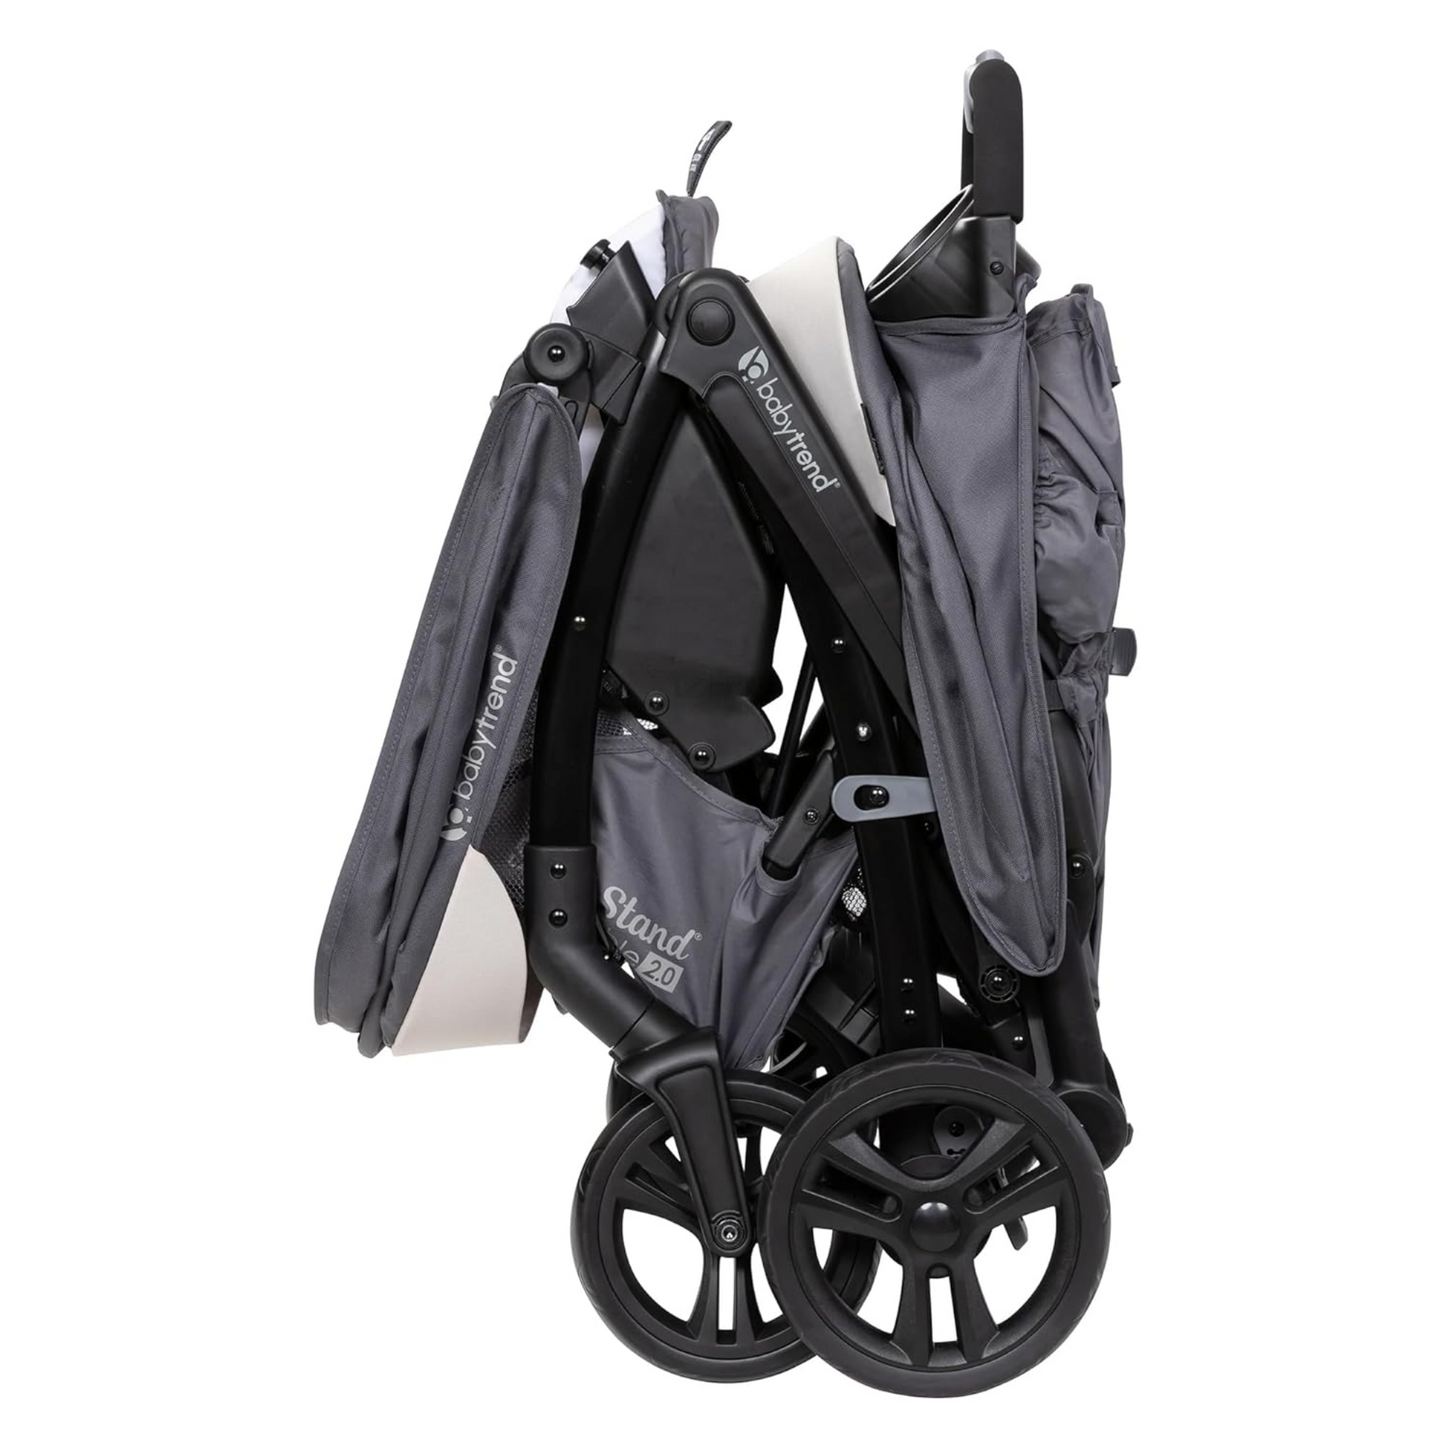 Twin Baby Stroller with 2 Car Seats 2 Infant Swings Twin Newborn Playard Combo